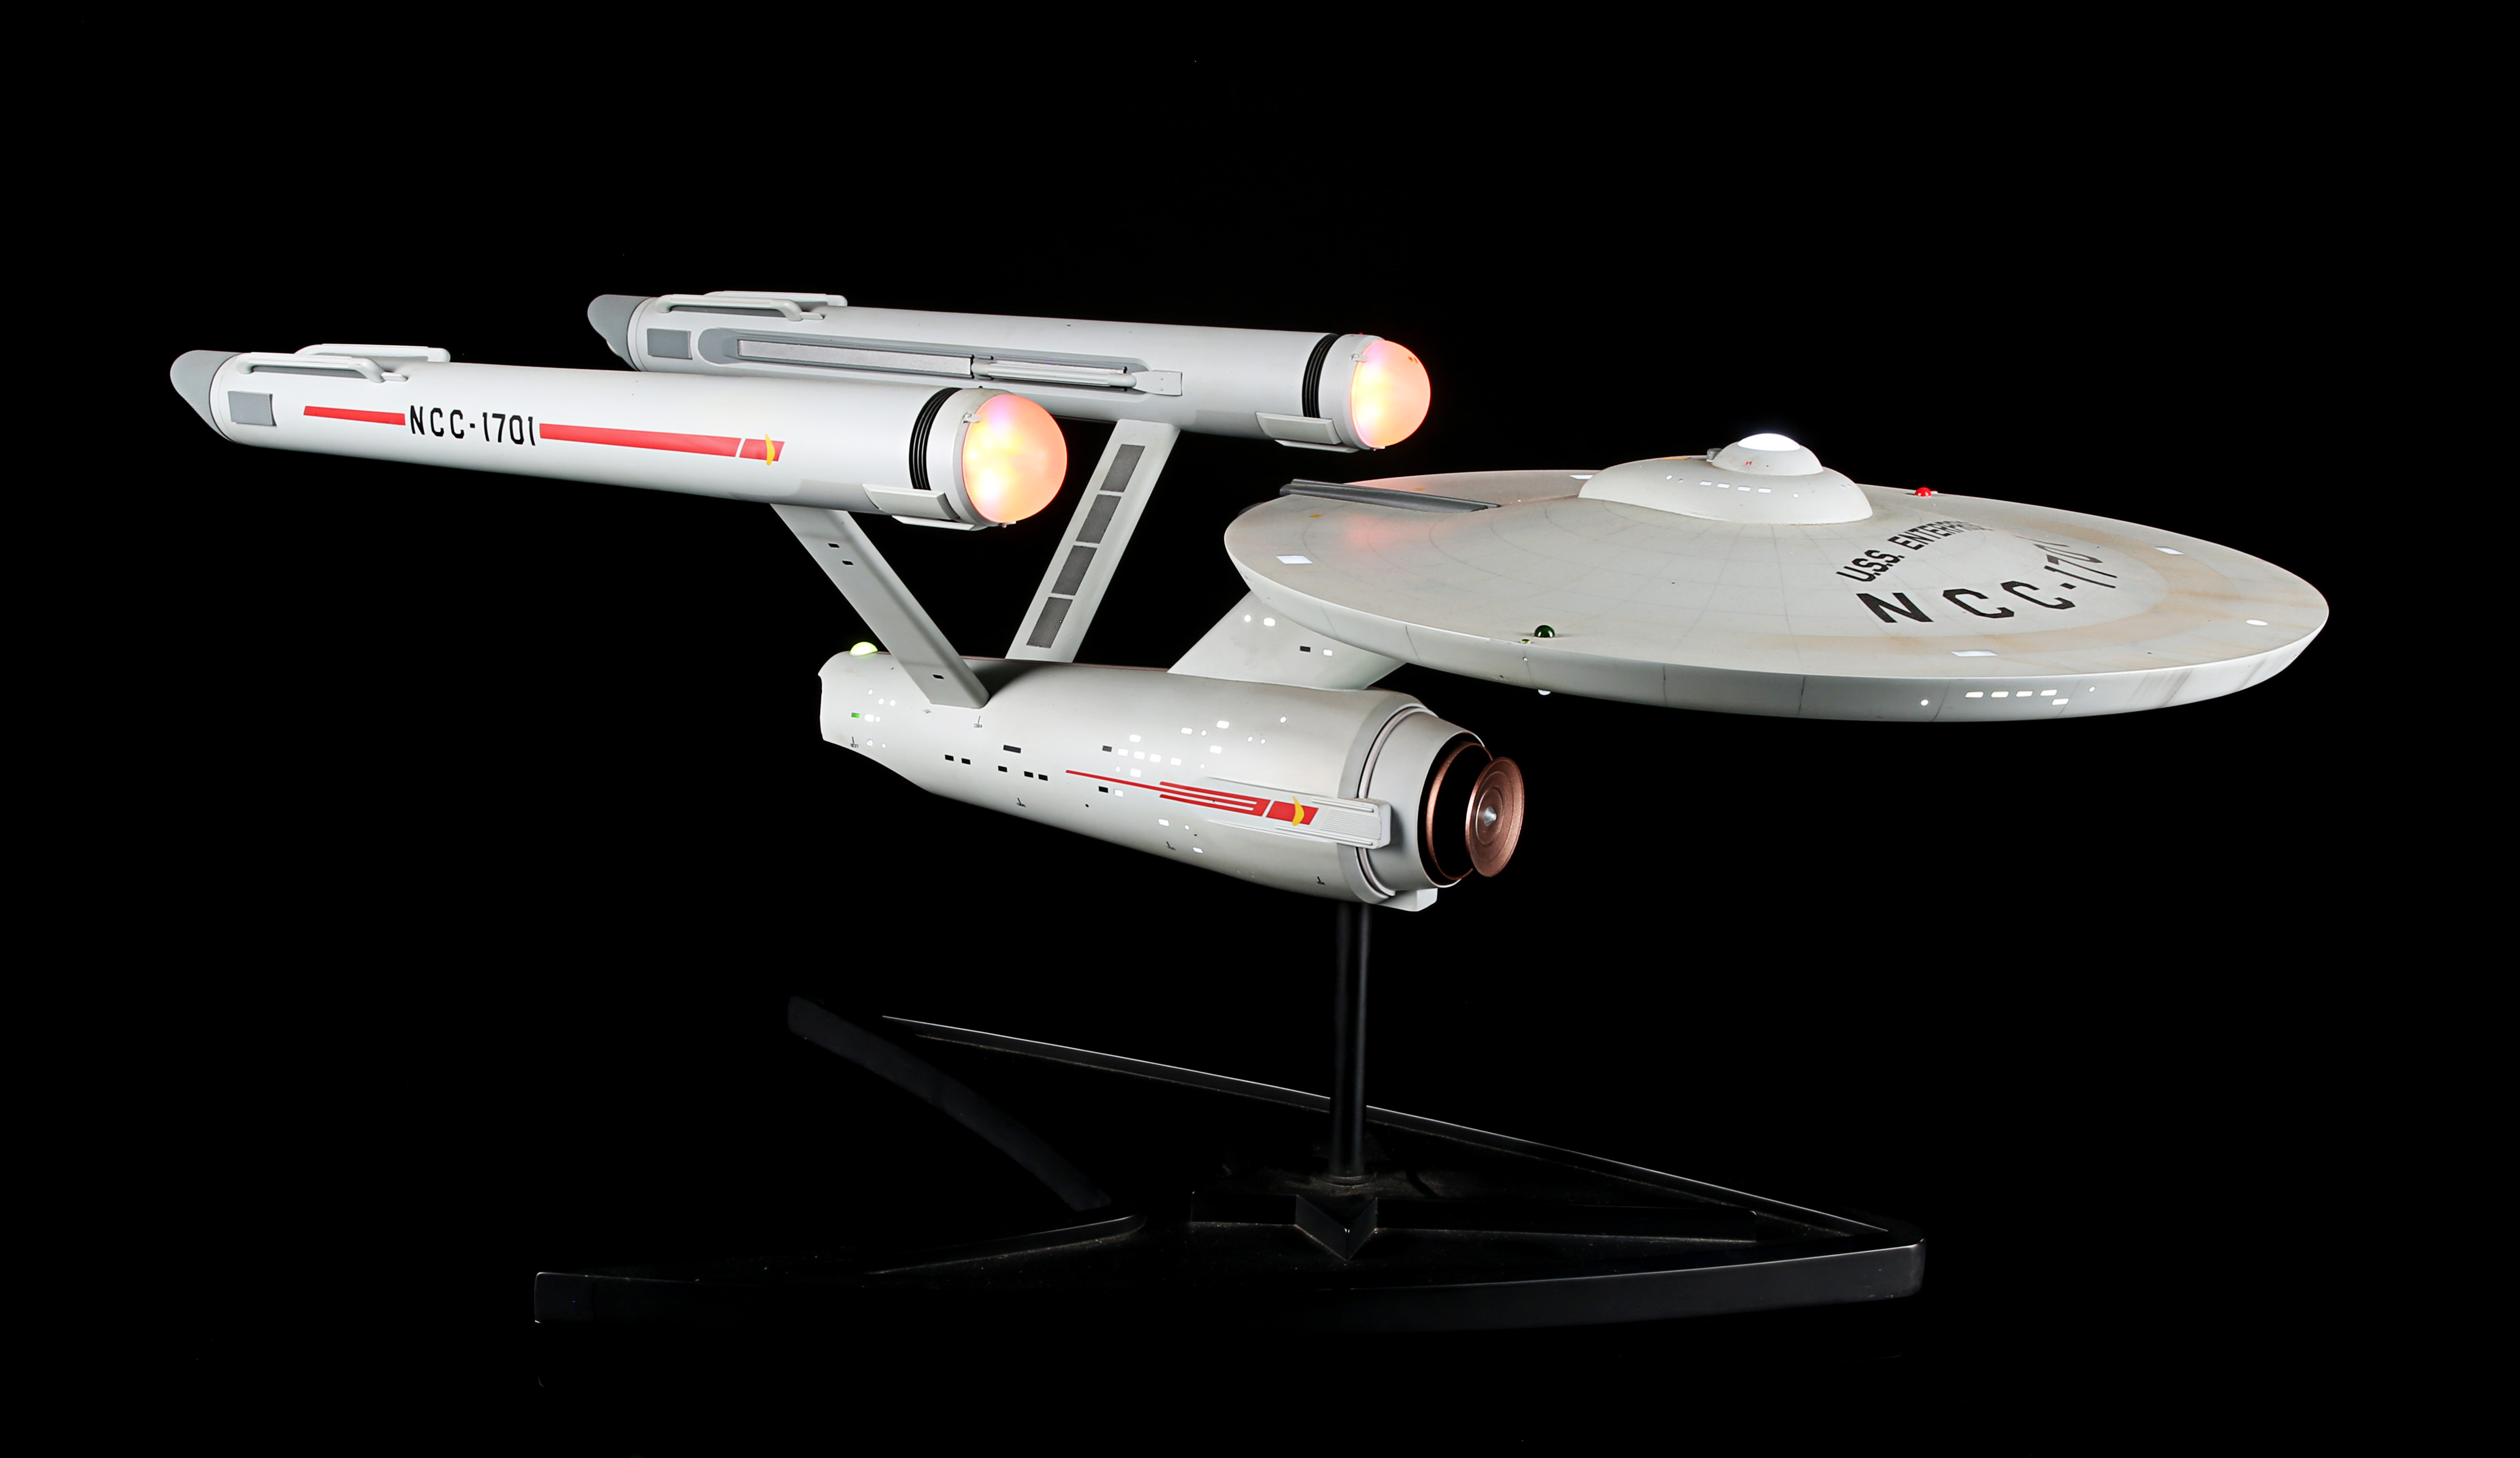 Star Trek USS Enterprise NCC-1701 model replica 